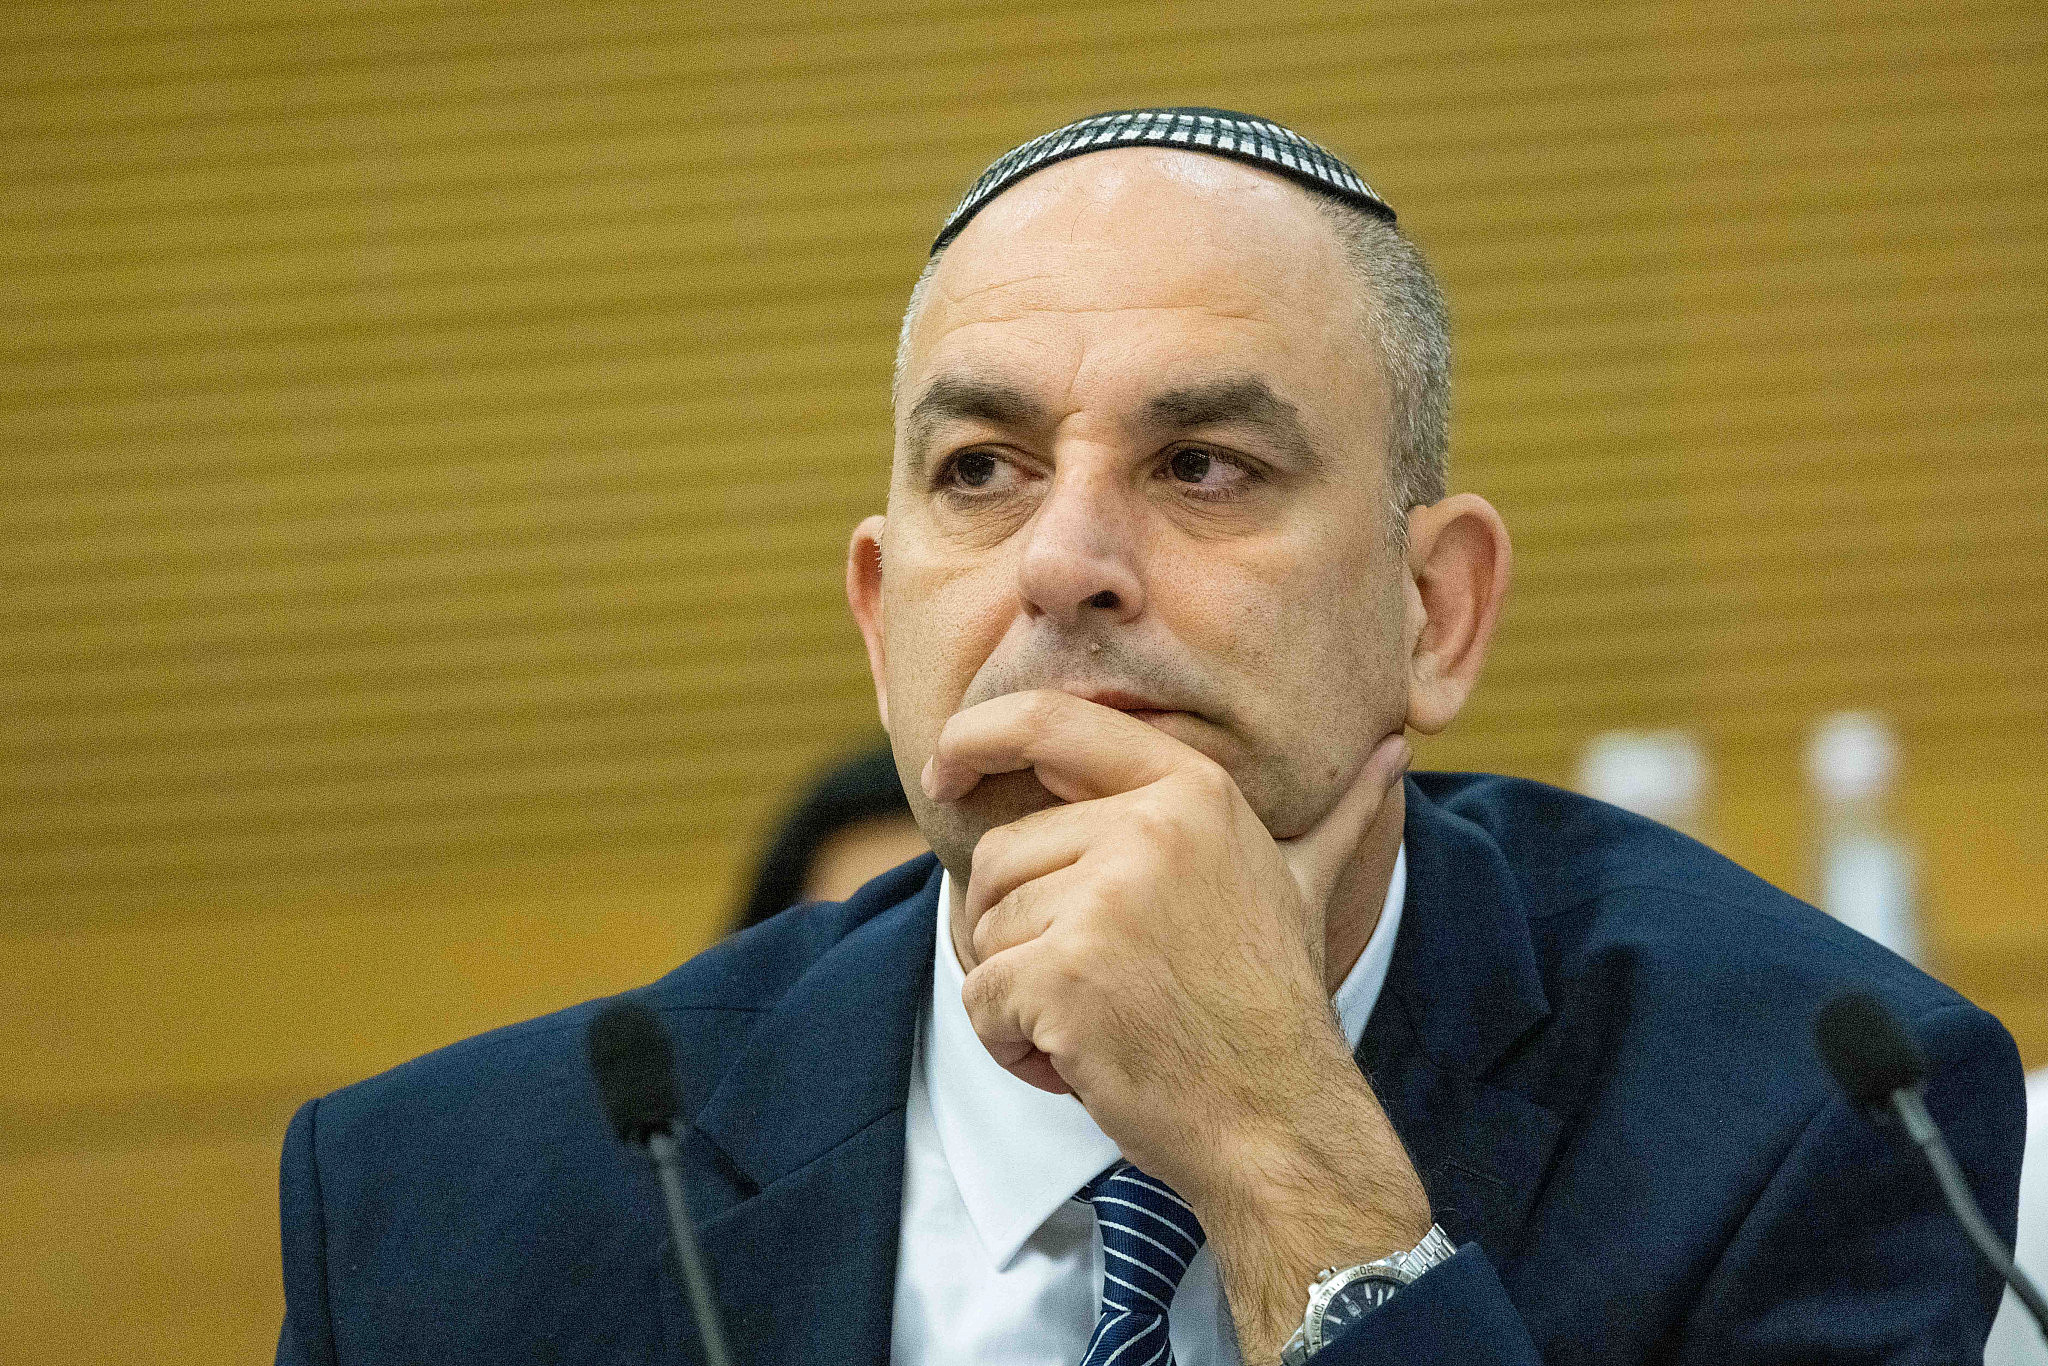 Lod Mayor Yair Revivo attends an internal security committee meeting at the Knesset in Jerusalem, November 8, 2021. (Yonatan Sindel/Flash90)